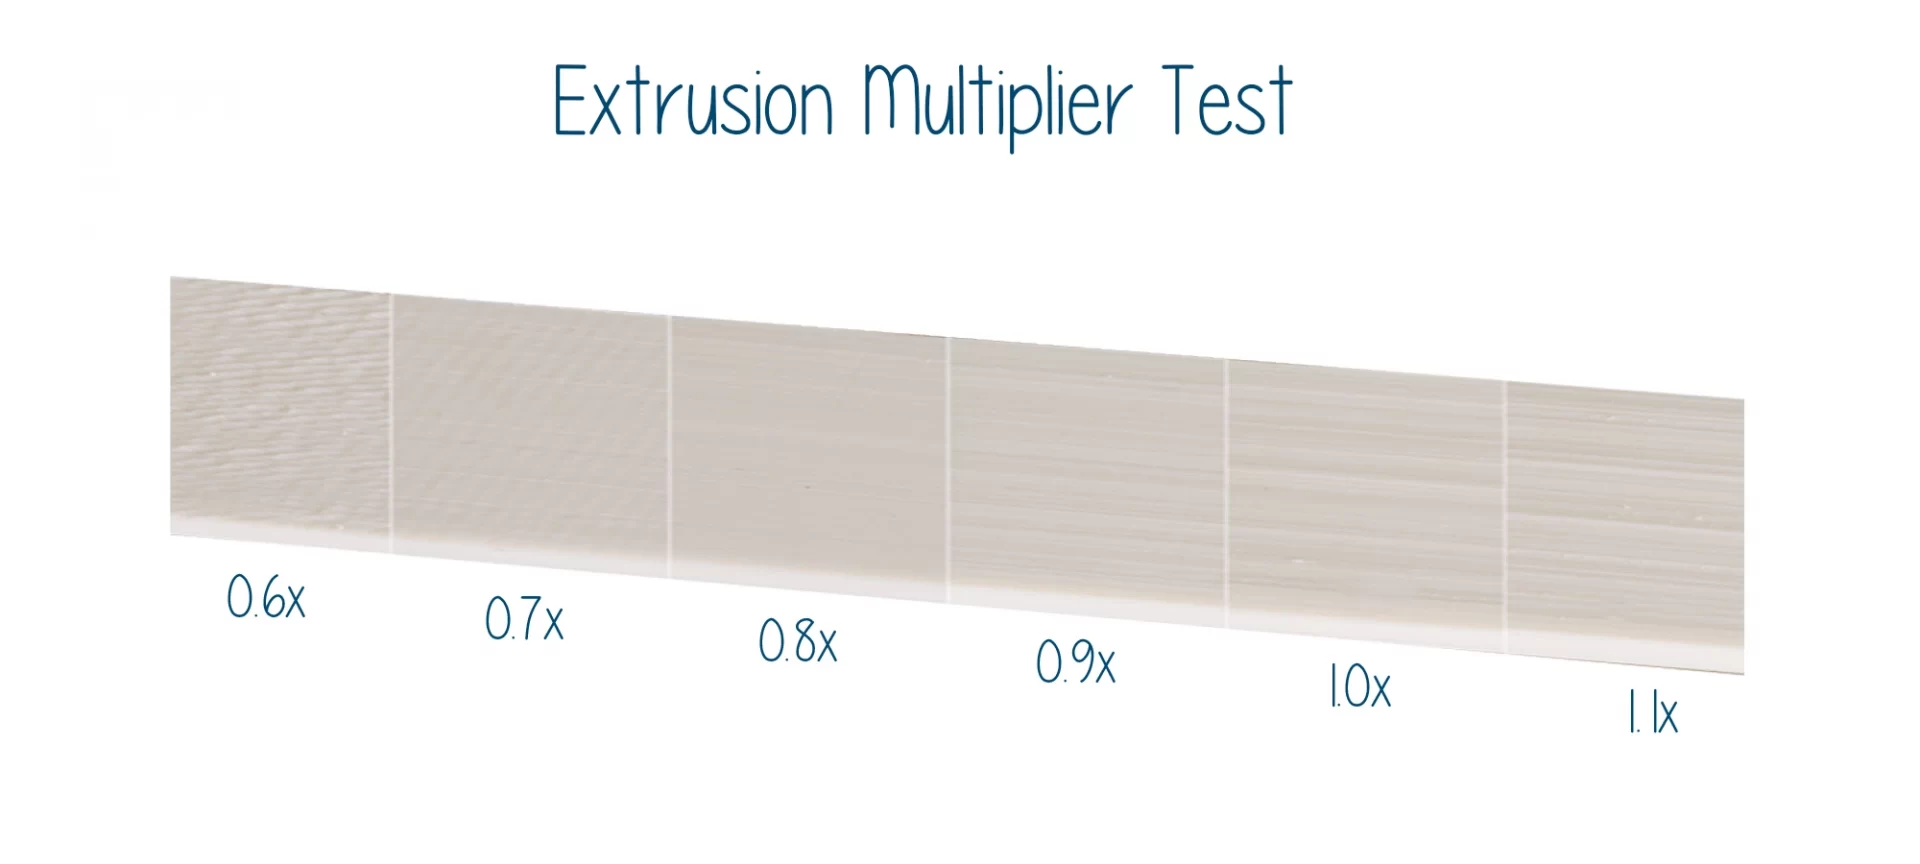 extrusion multiplier test